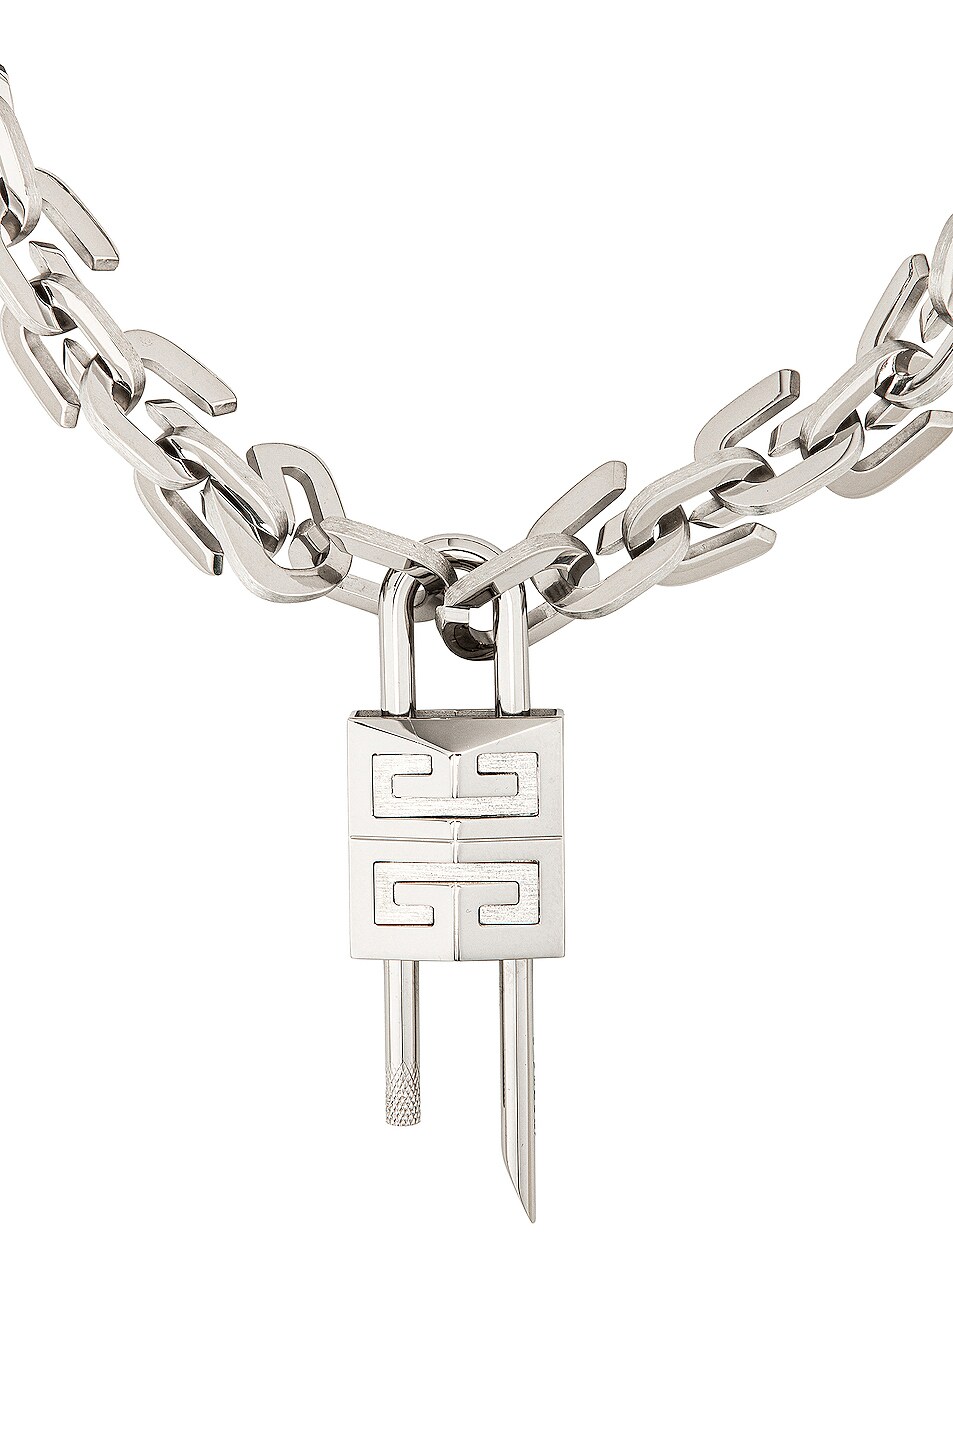 Givenchy G Link Lock Medium Necklace in Silver Grey | FWRD